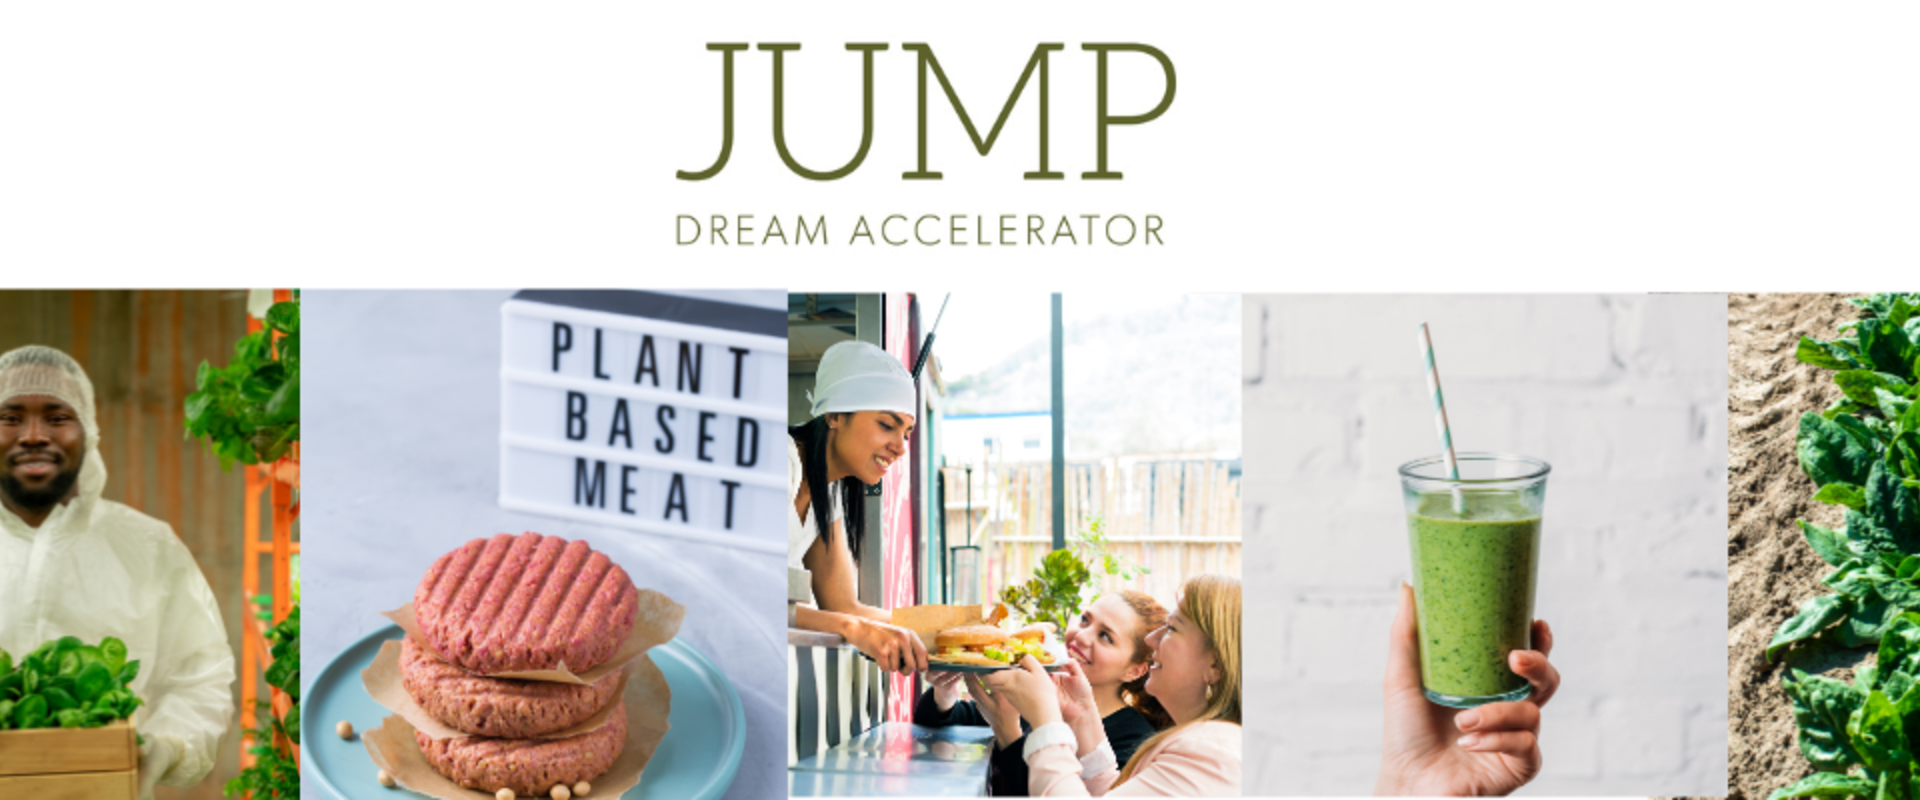 Inschrijving JUMP Dream Accelerator geopend